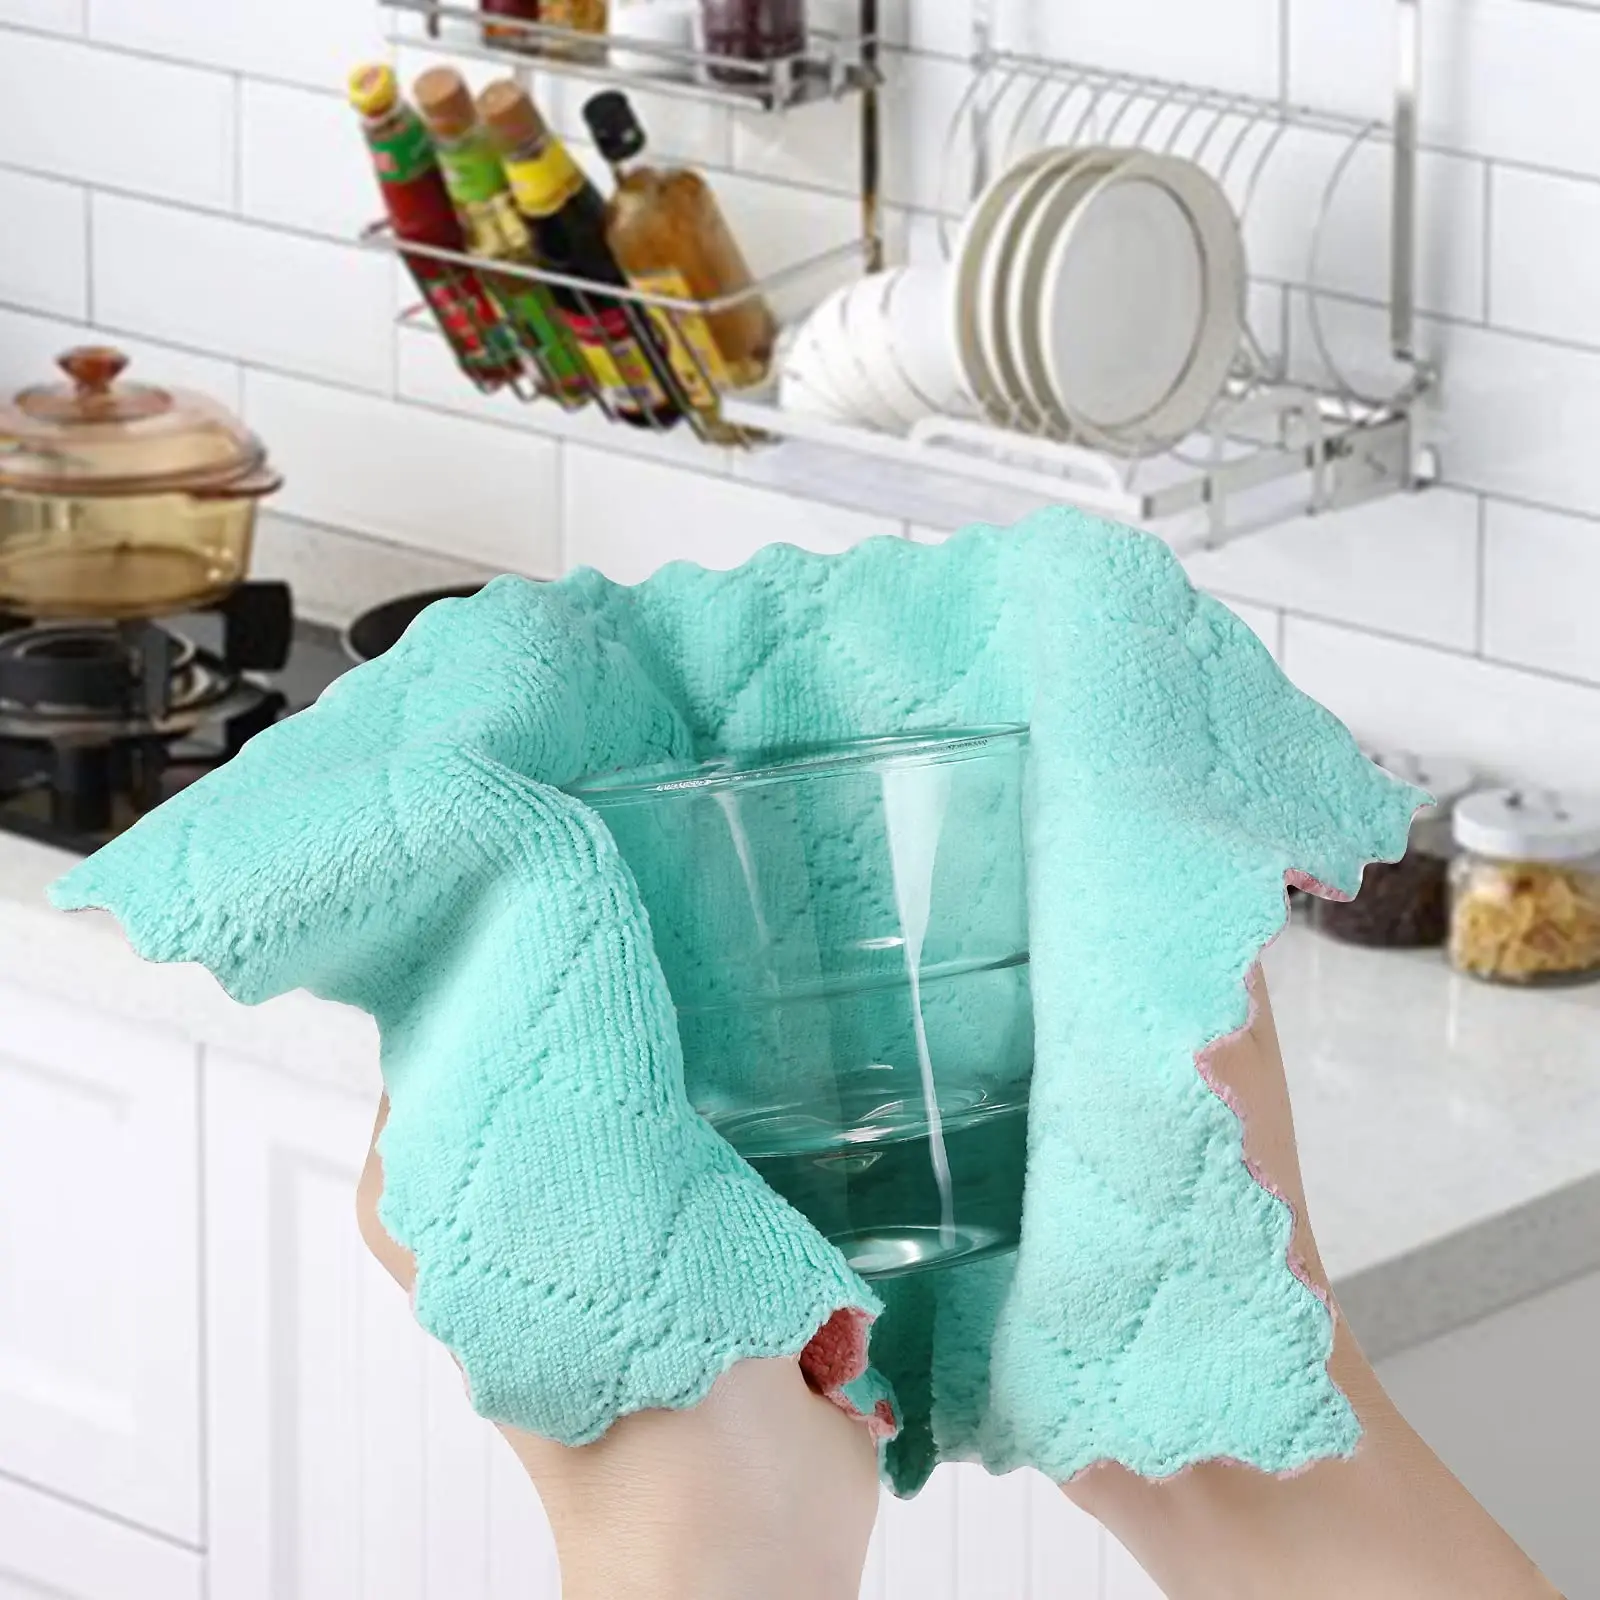 https://ae01.alicdn.com/kf/S9487f37fa27b4d149d61b31f739b59d3G/20-Pack-Kitchen-Dish-Cloths-Dish-Towels-Super-Absorbent-Coral-Fleece-Cloth-Premium-Dishcloths-Fast-Drying.jpg